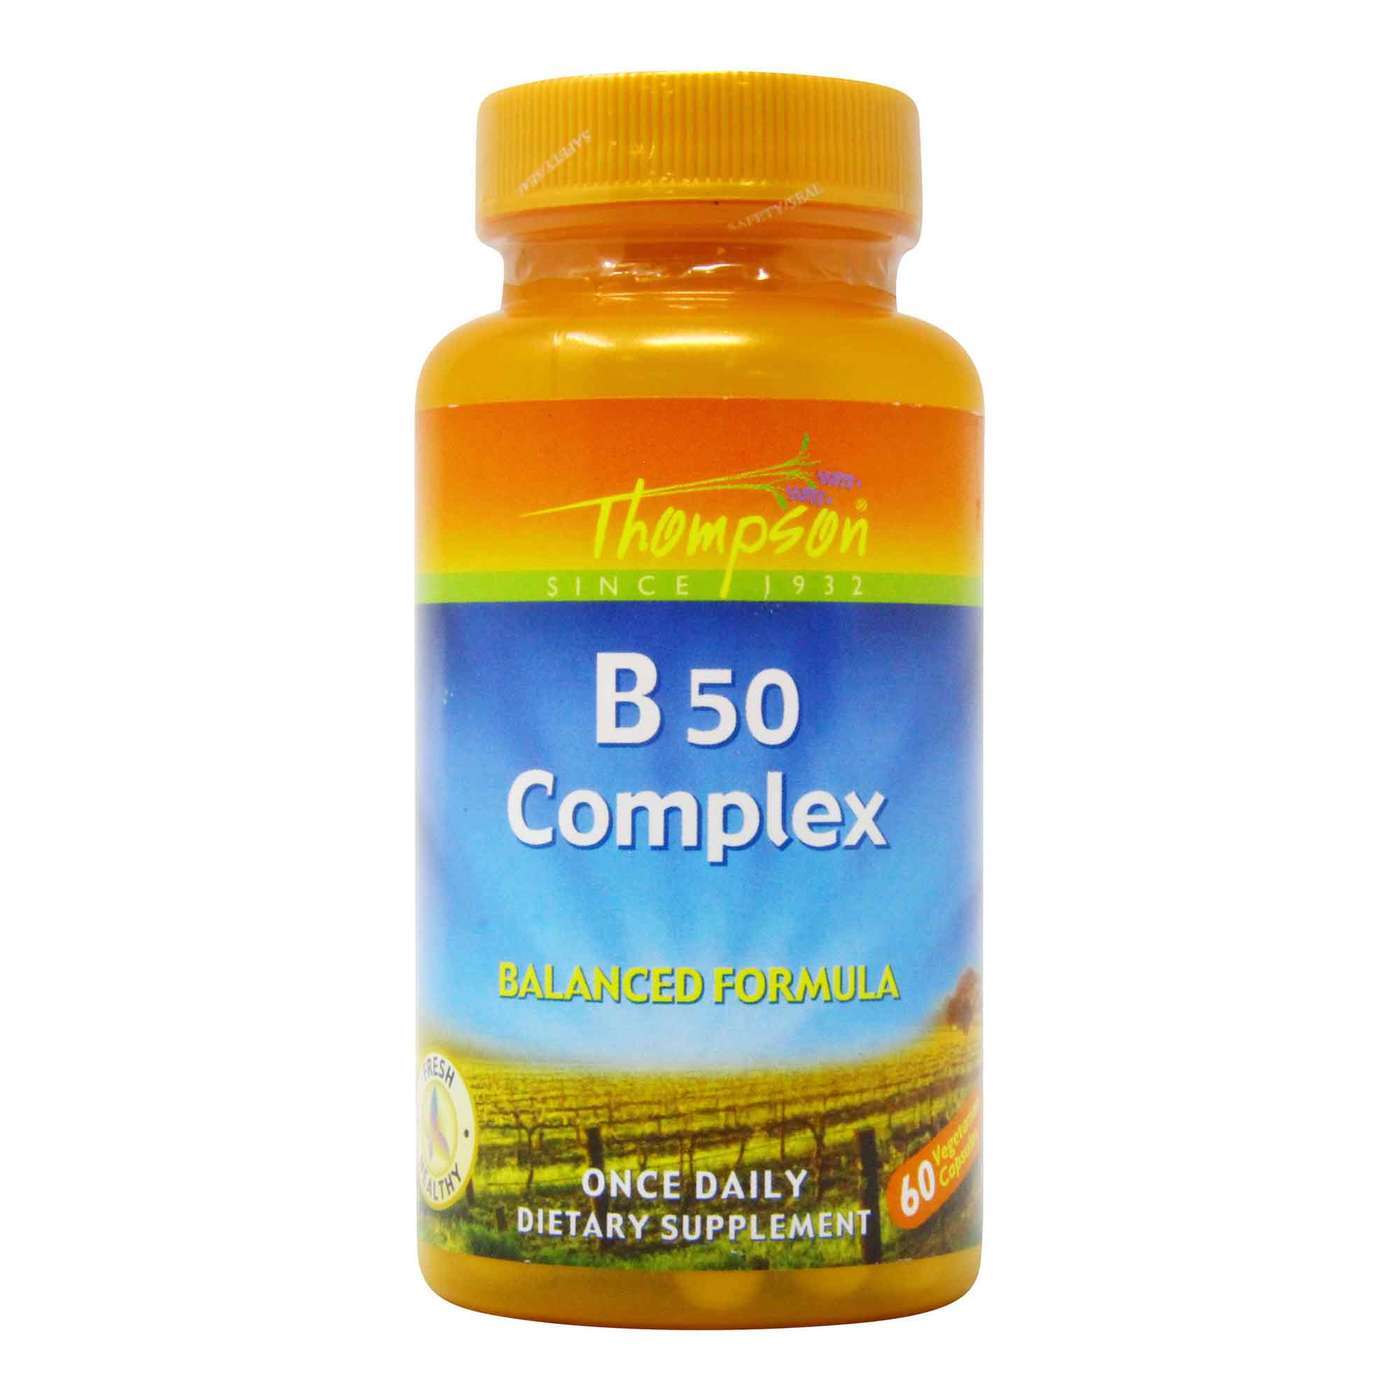 B 50 Complex Balanced Formula